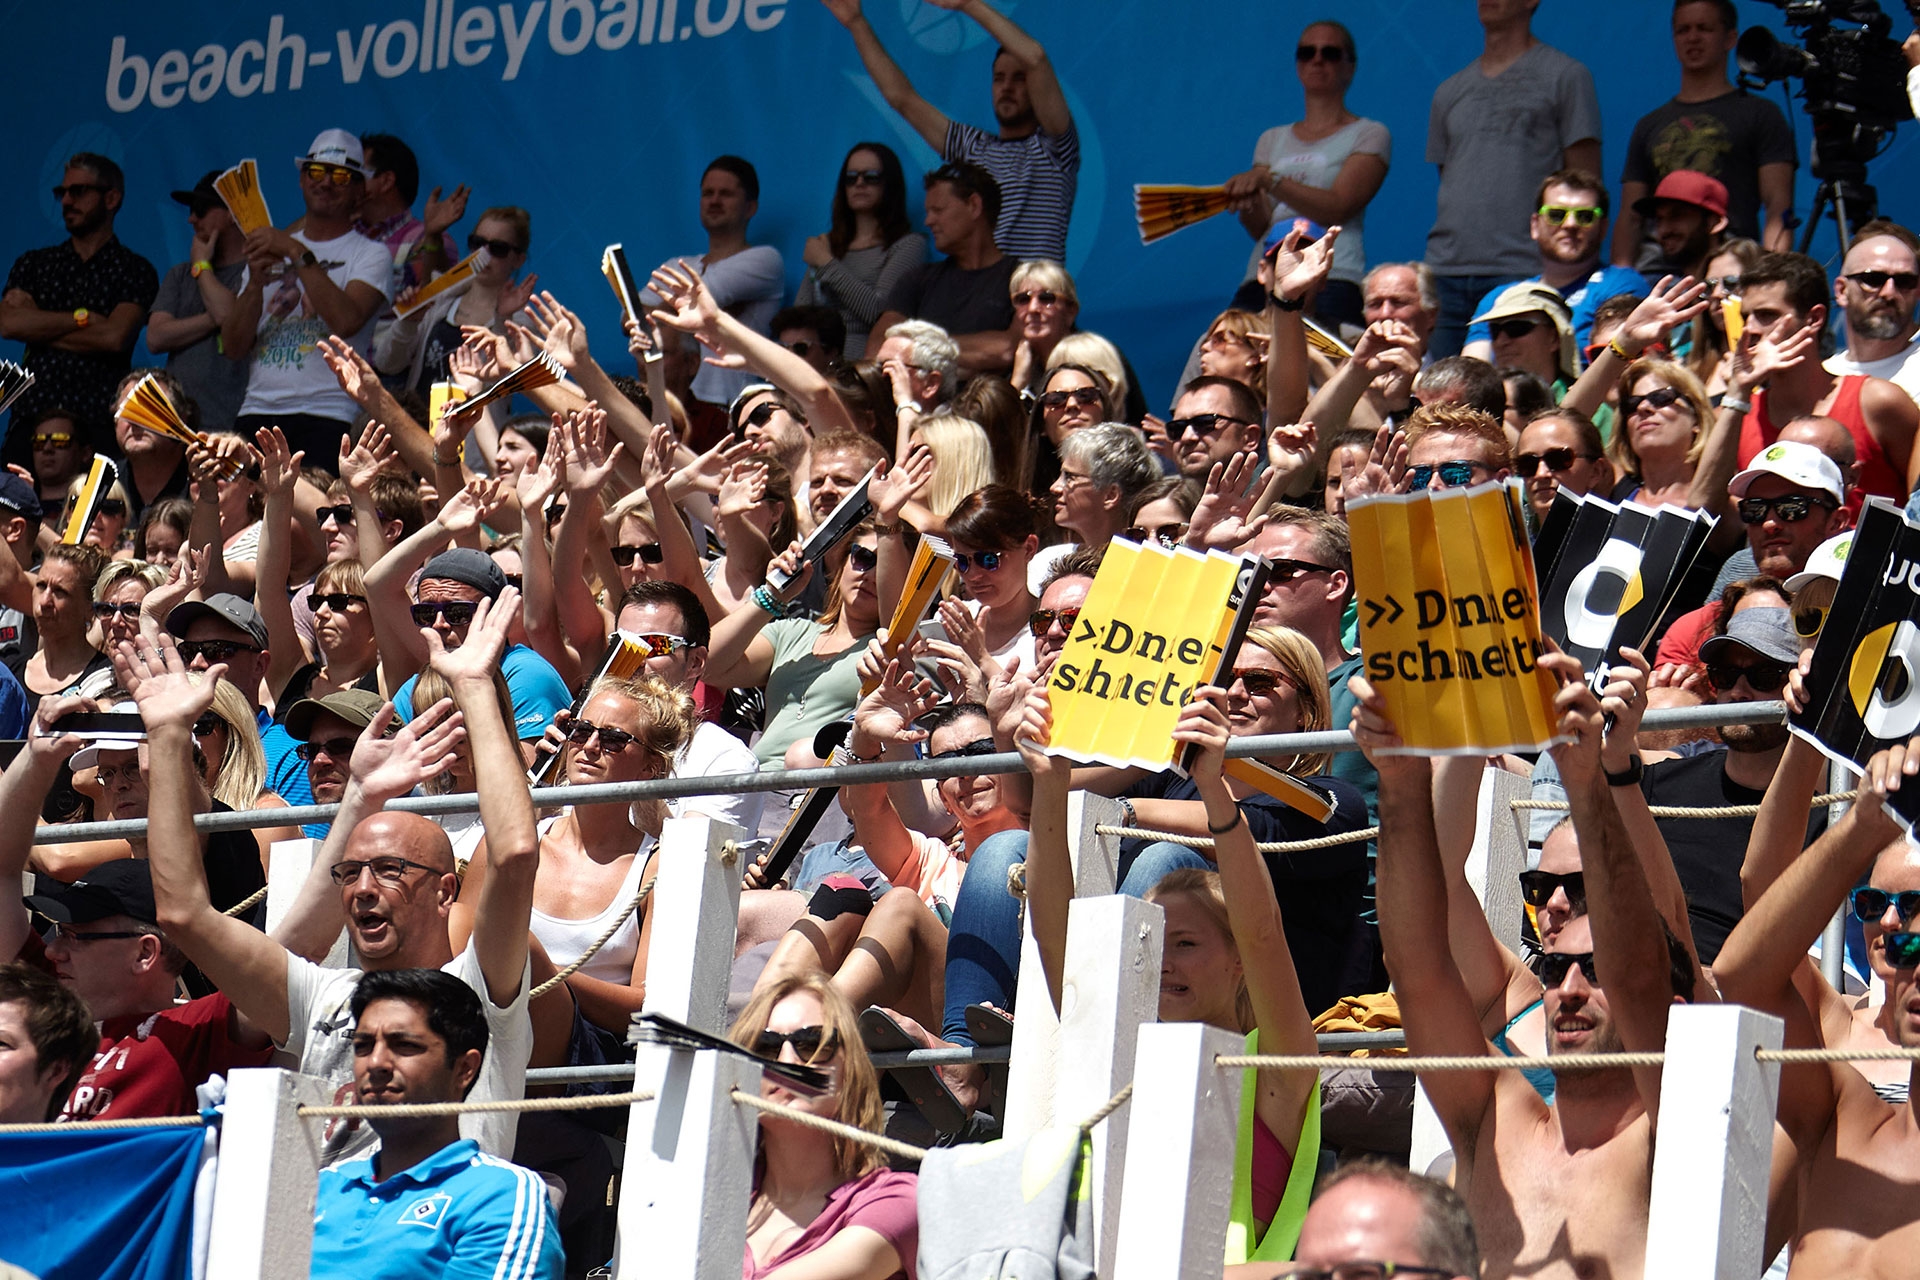 German fans go crazy on Center Court. Photocredit: Mike Ranz.